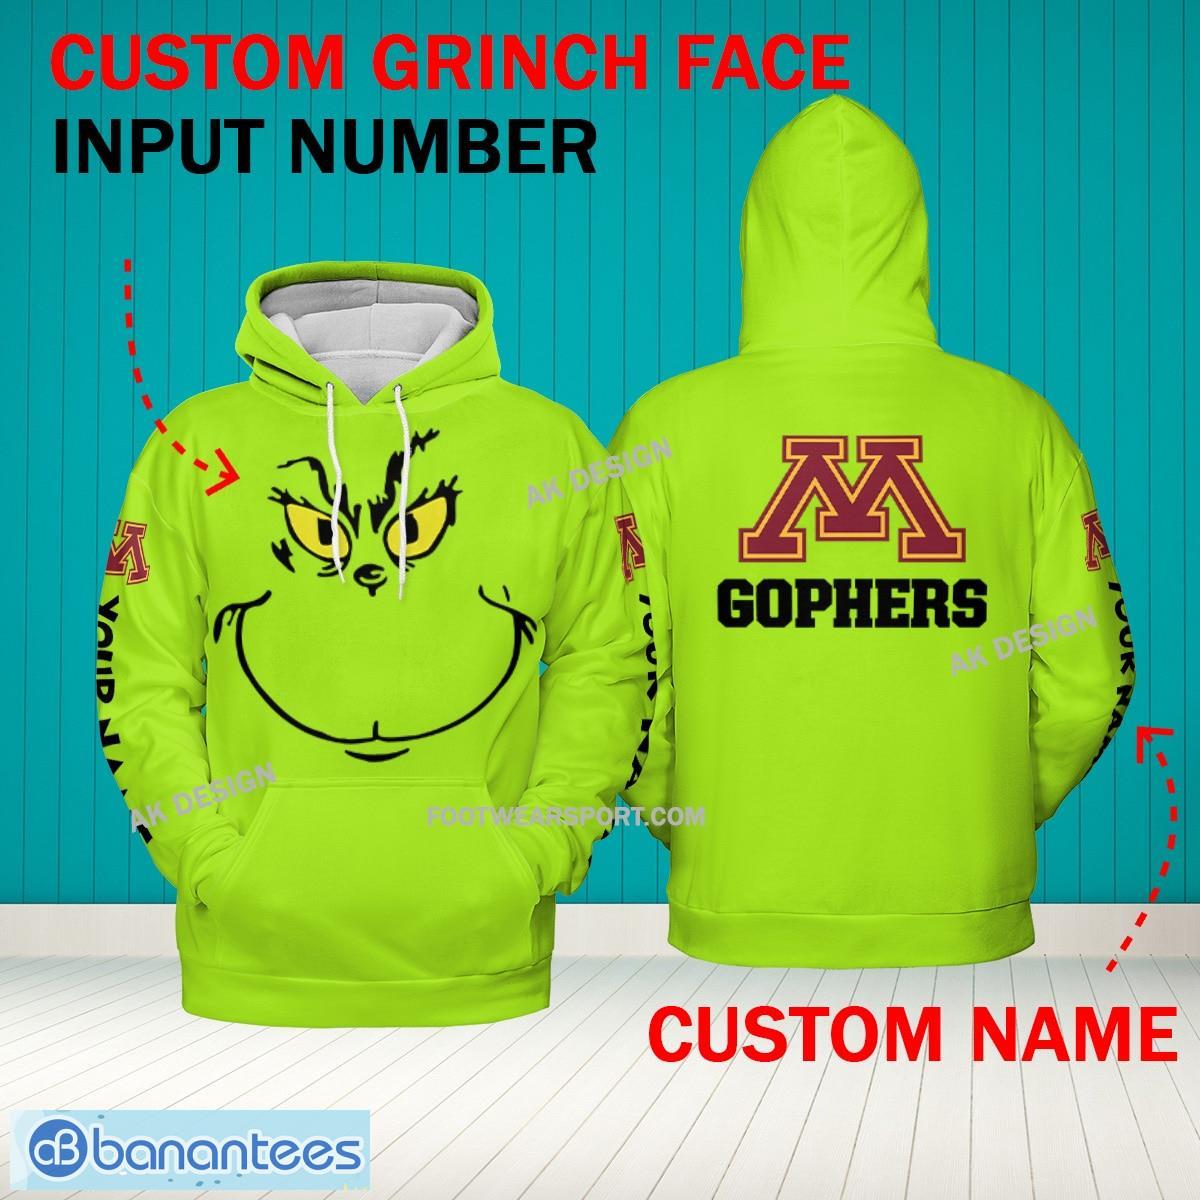 Grinch Face Minnesota Golden Gophers 3D Hoodie, Zip Hoodie, Sweater Green AOP Custom Number And Name - Grinch Face NCAA Minnesota Golden Gophers 3D Hoodie